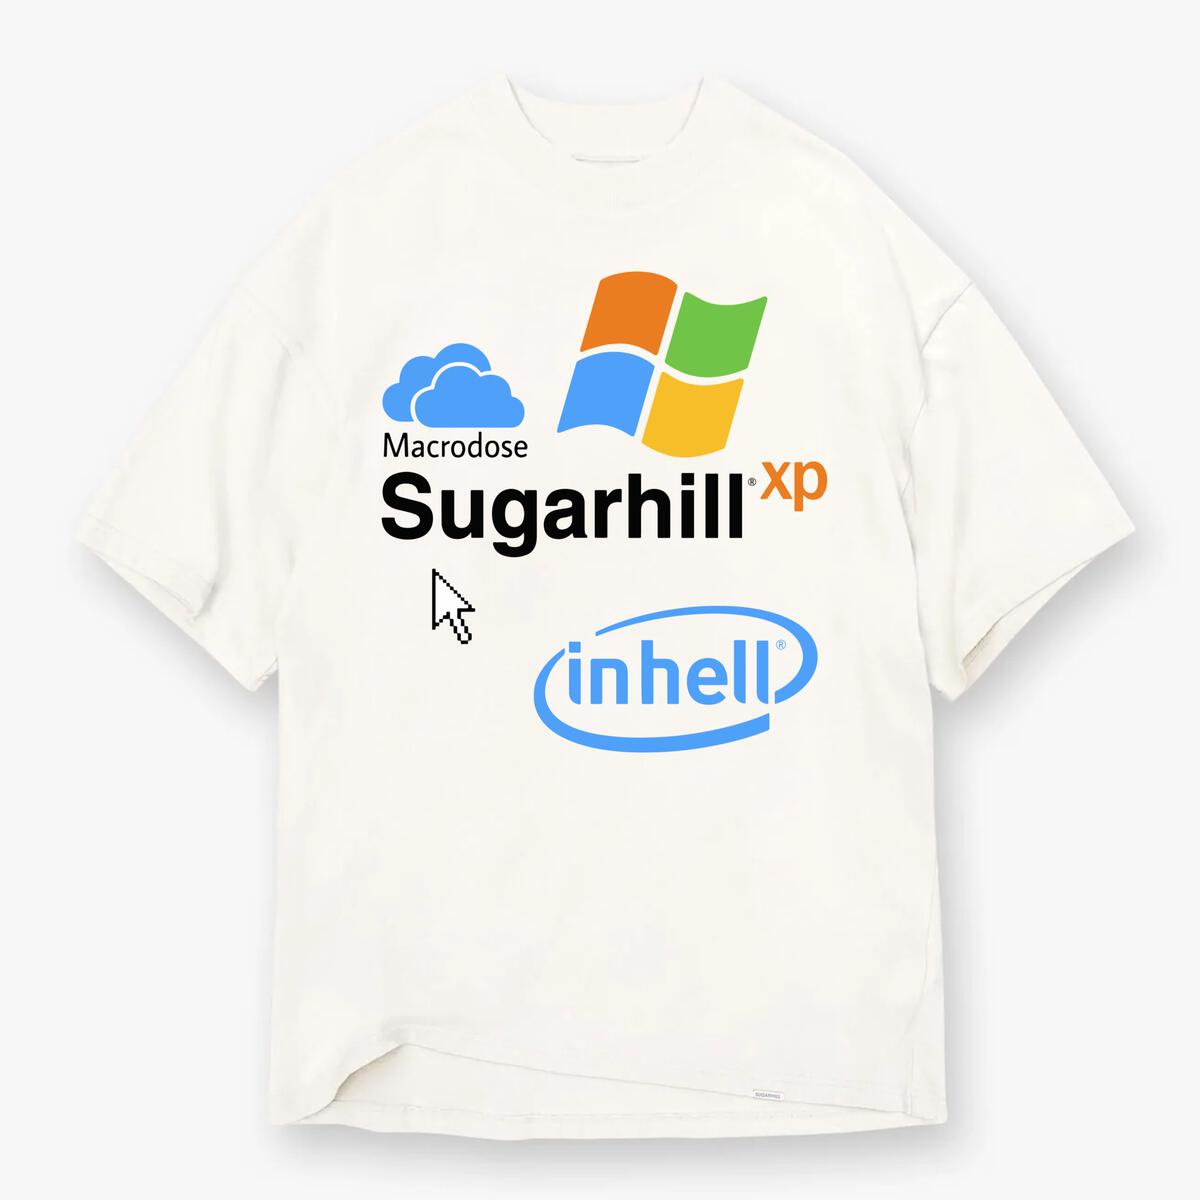 Sugarhill "Corporate" T-SHIRT